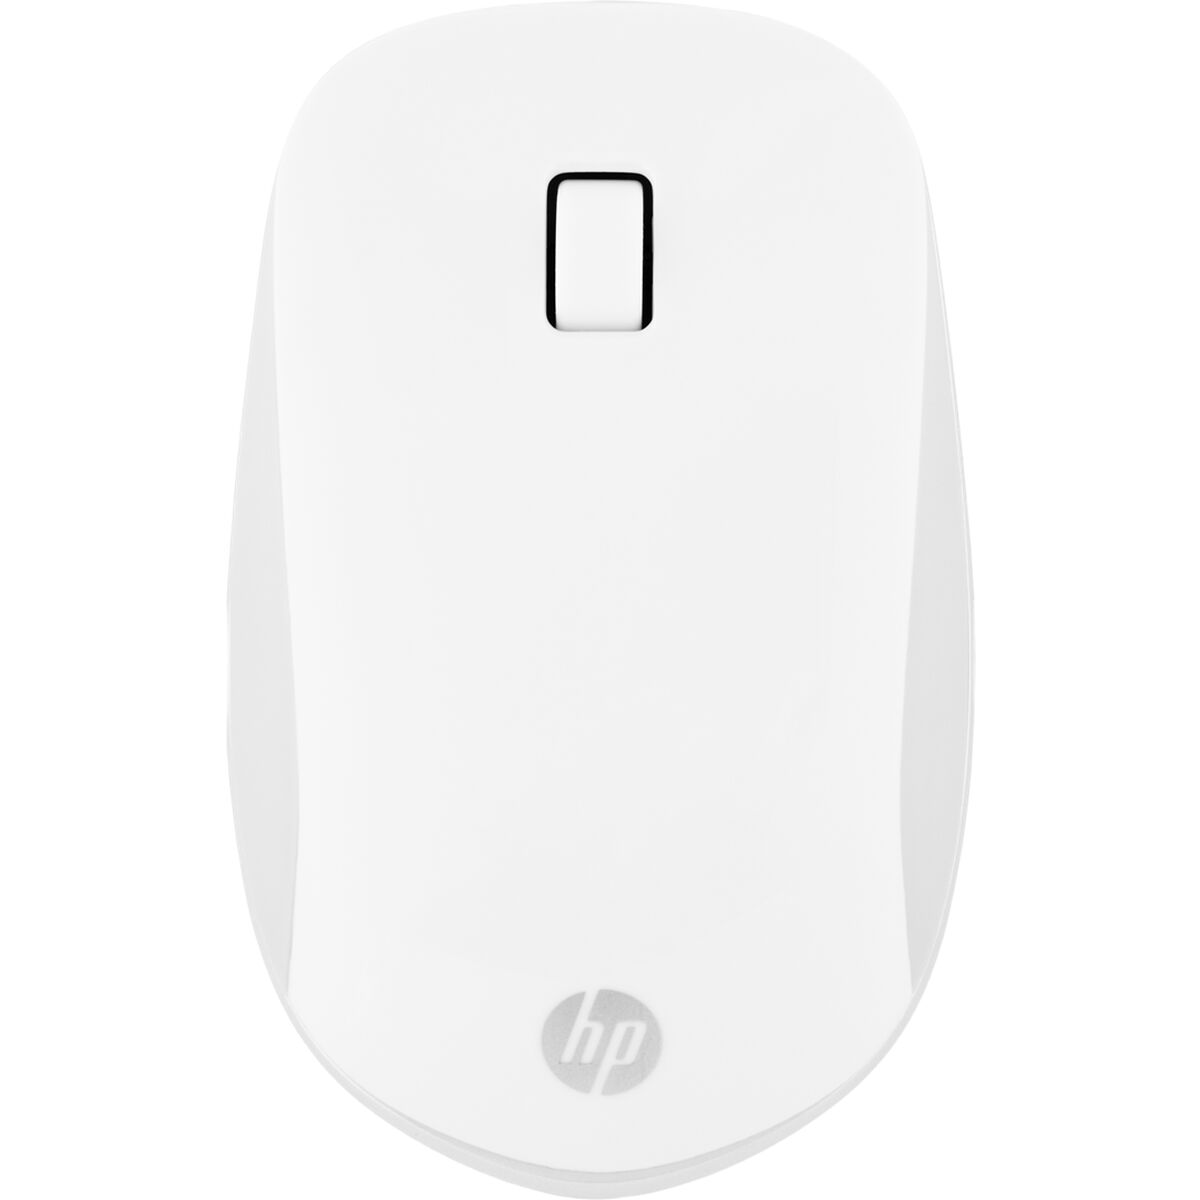 Schnurlose Mouse HP 410 Weiß - CA International 